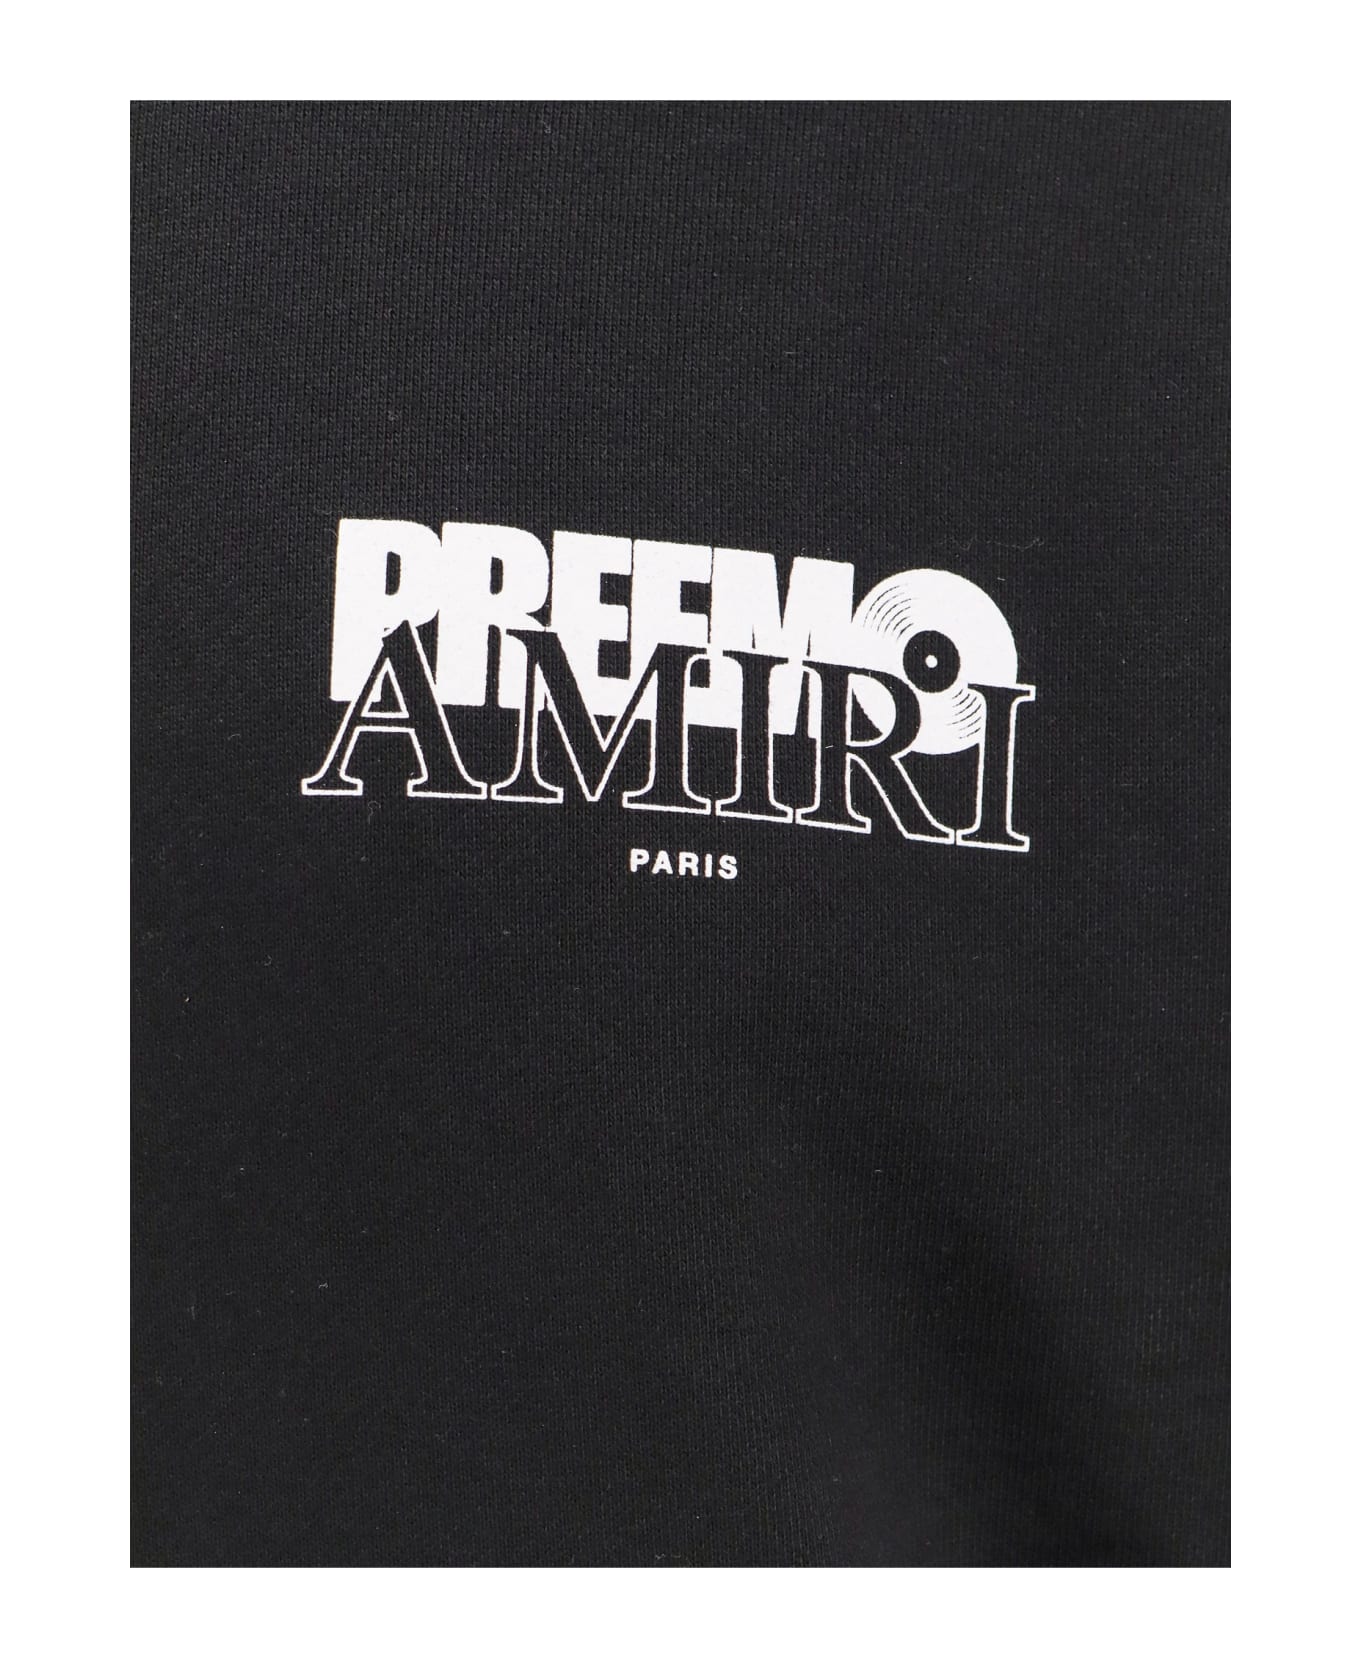 AMIRI Sweatshirt - Black フリース